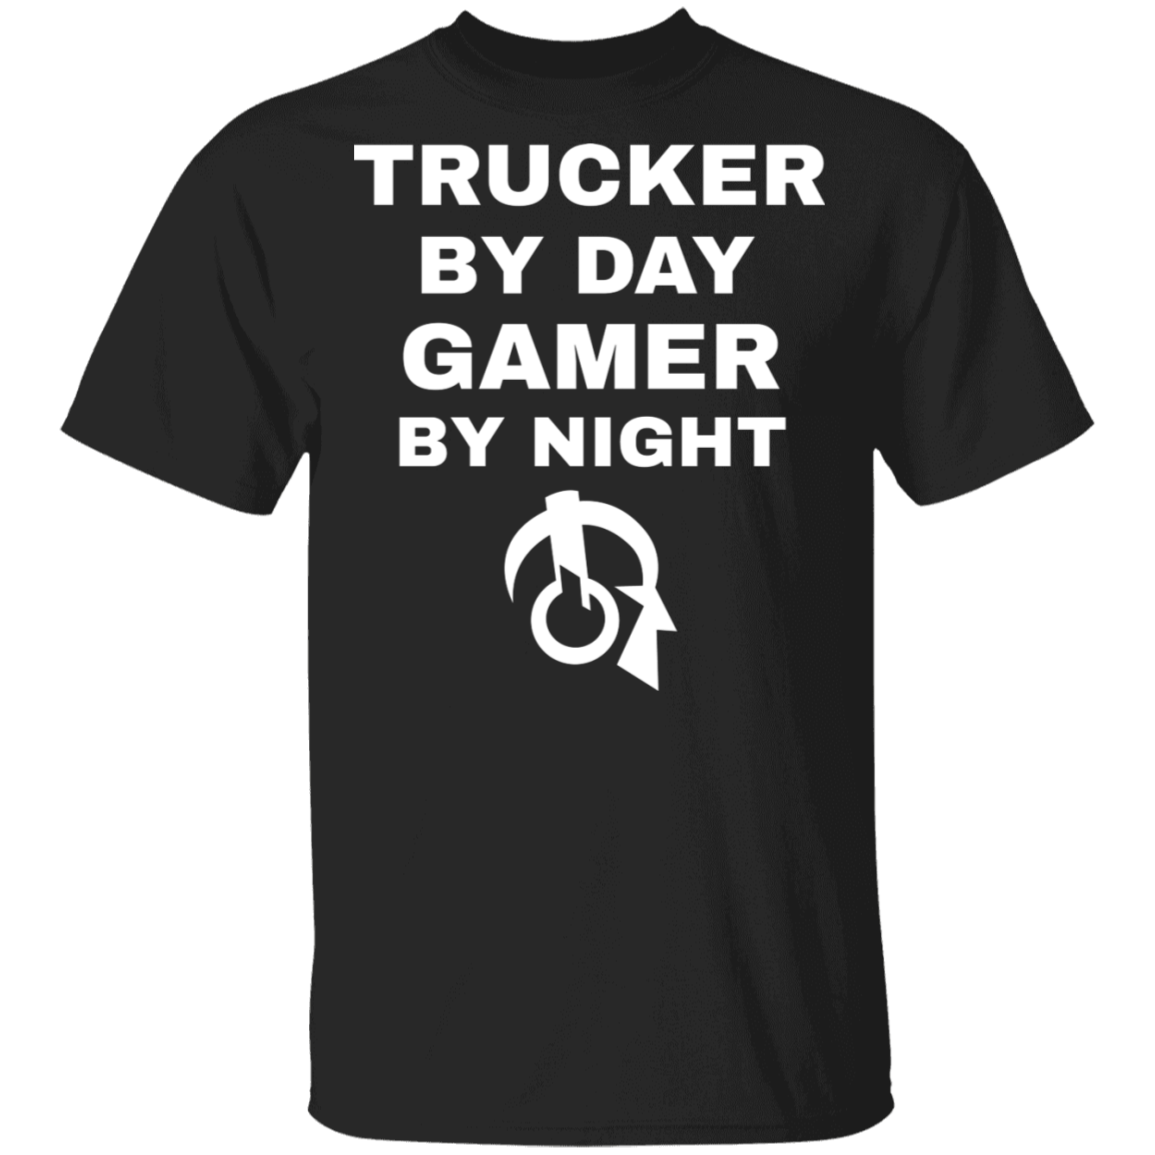 Trucker By Day Gamer By Night T-Shirt